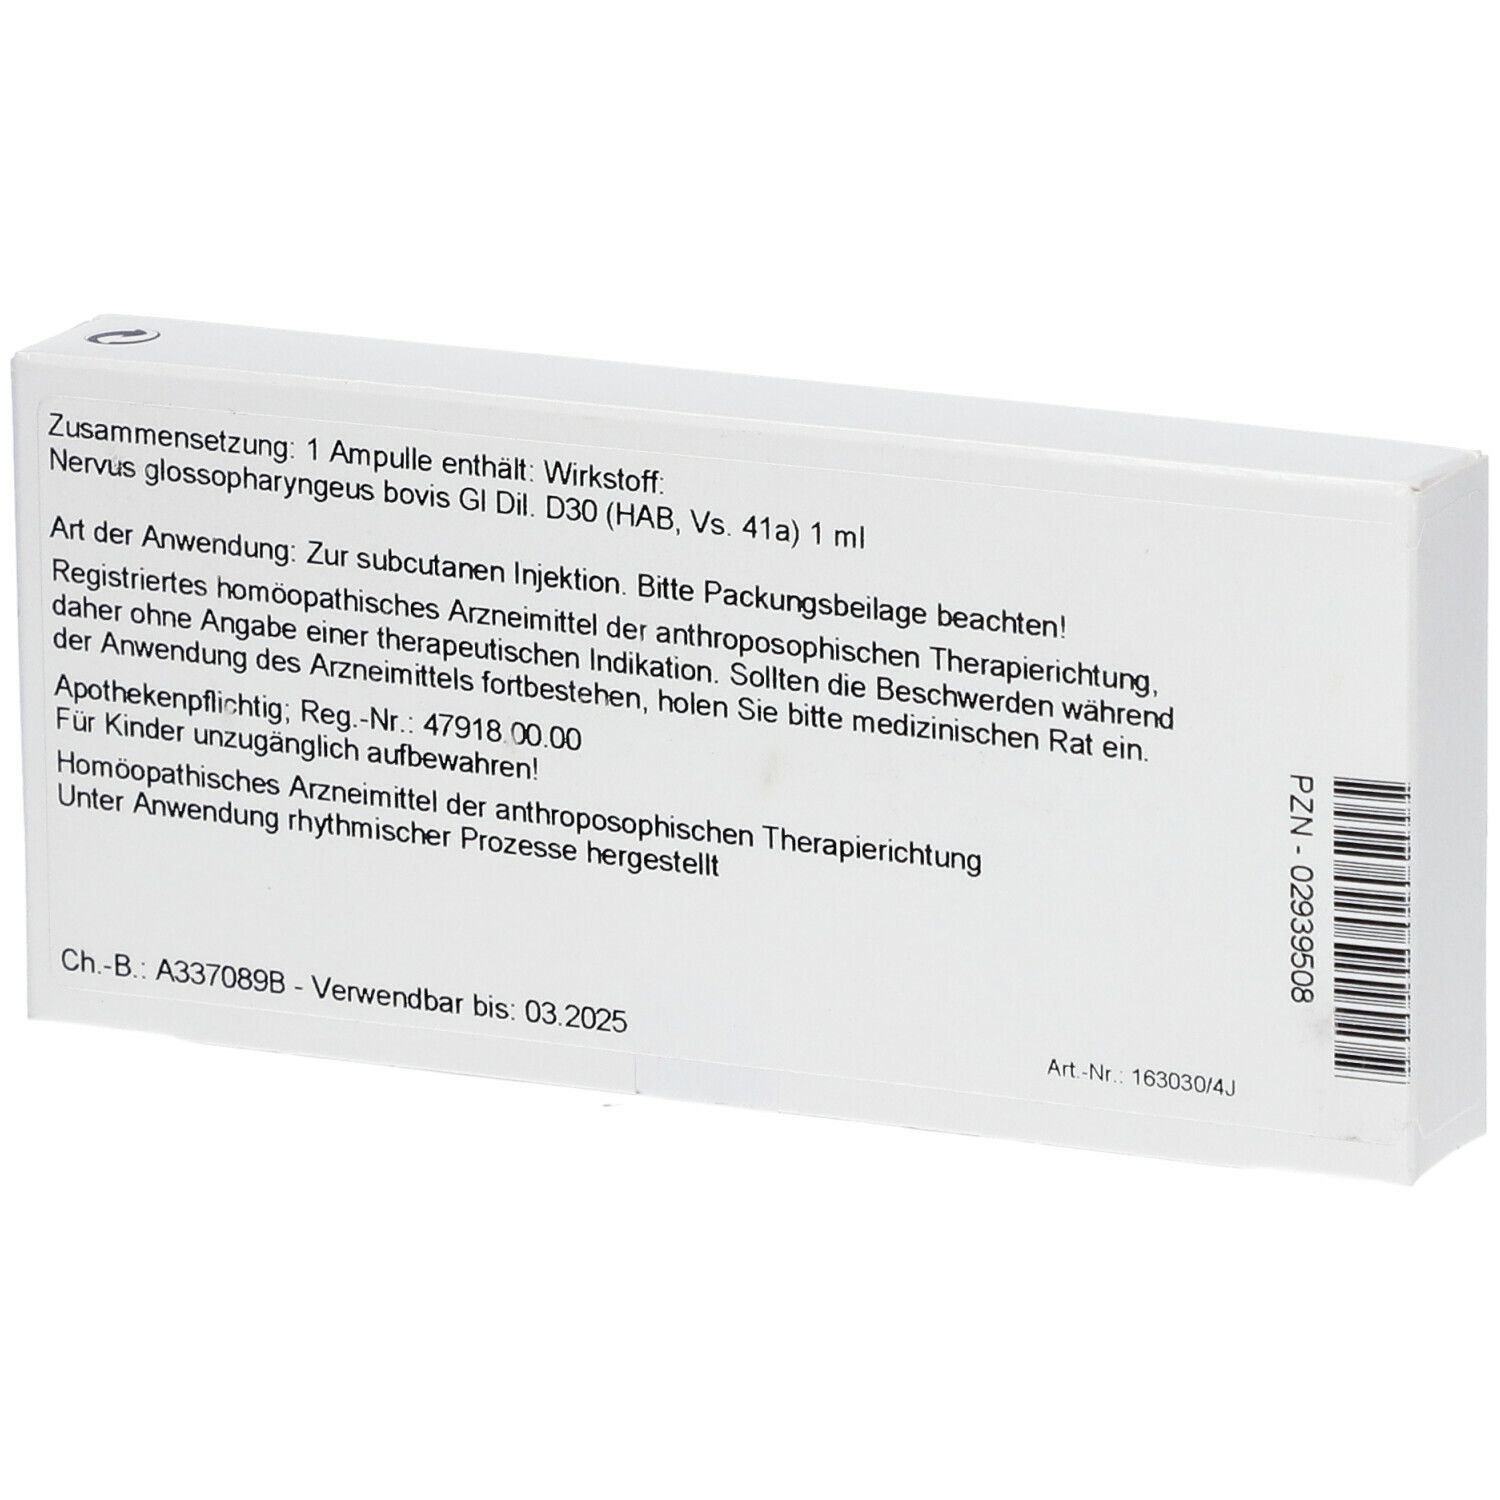 WALA® Nervus glossopharyngeus Gl D 30